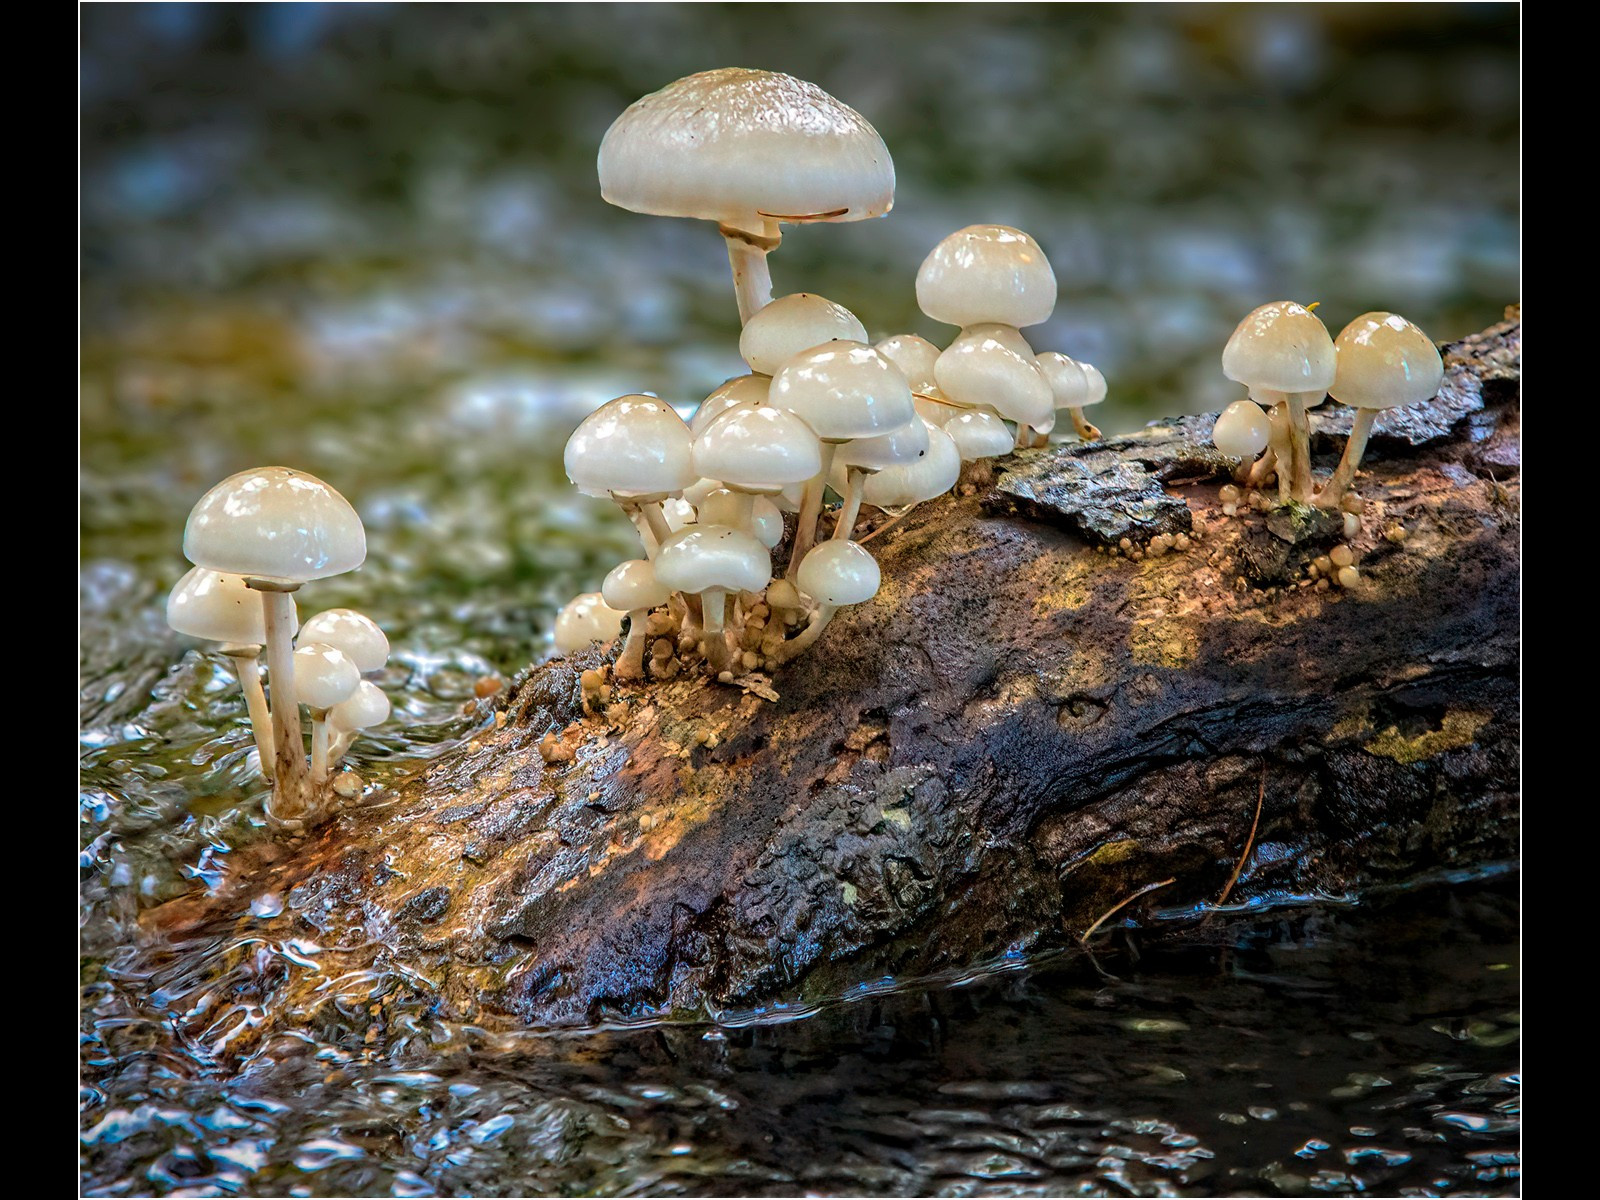 18. Porcelain Fungi